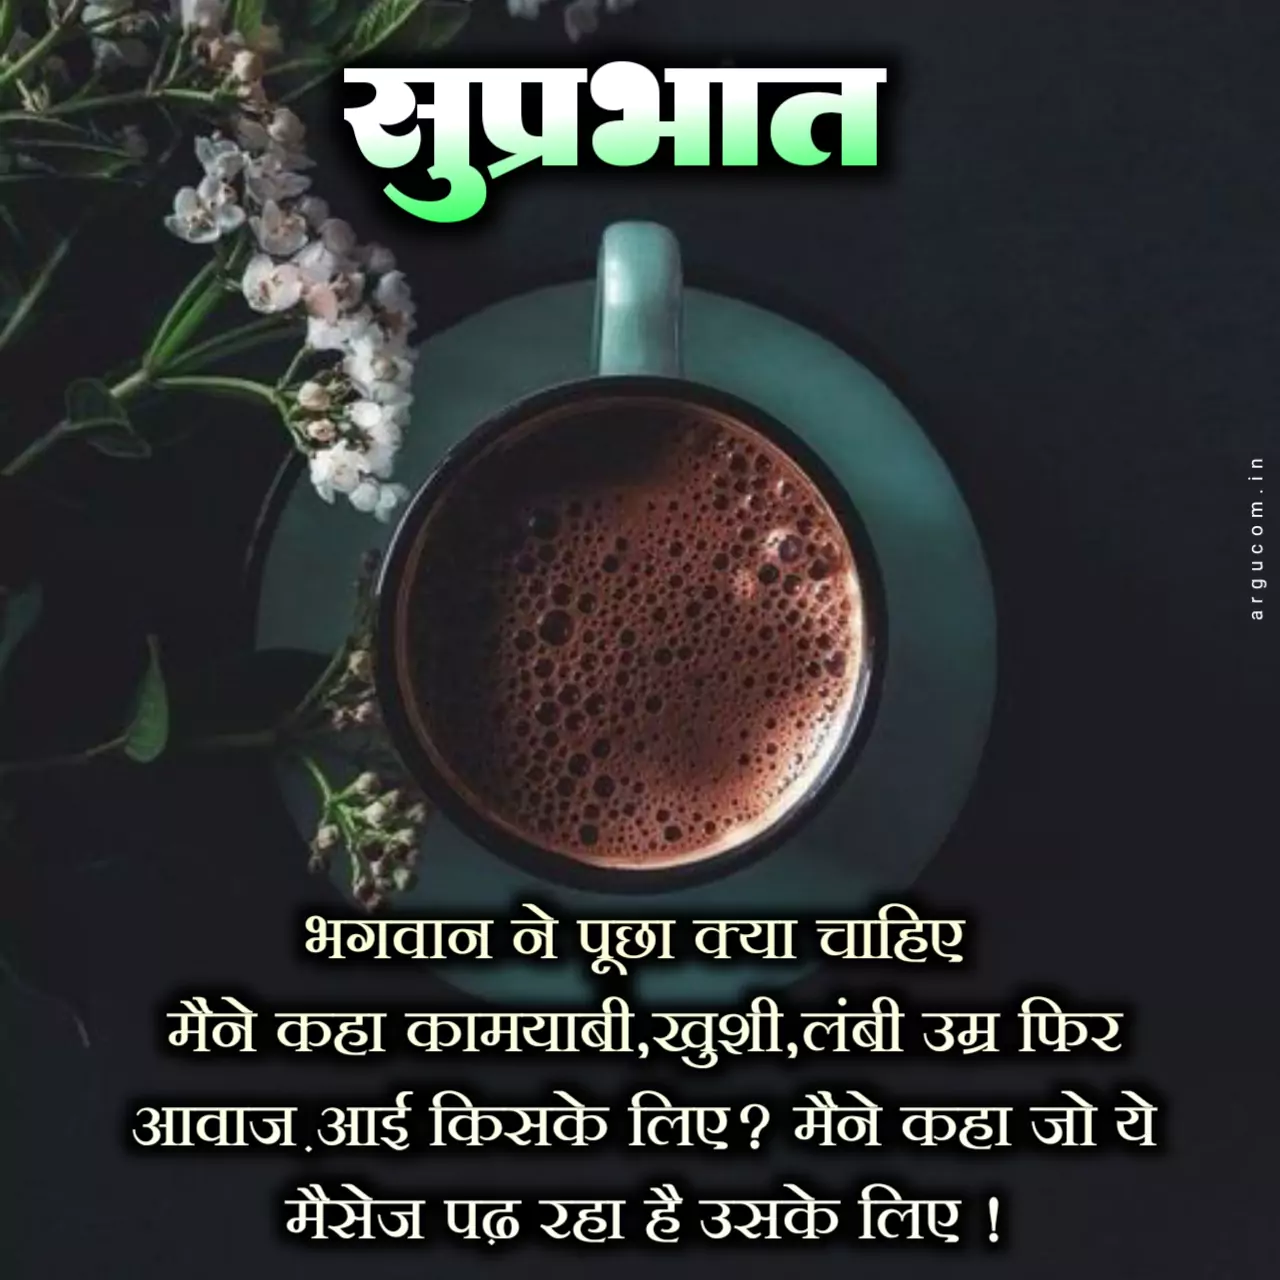 Good Morning Quotes In Hindi , गुड मॉर्निग कोट्स हिंदी